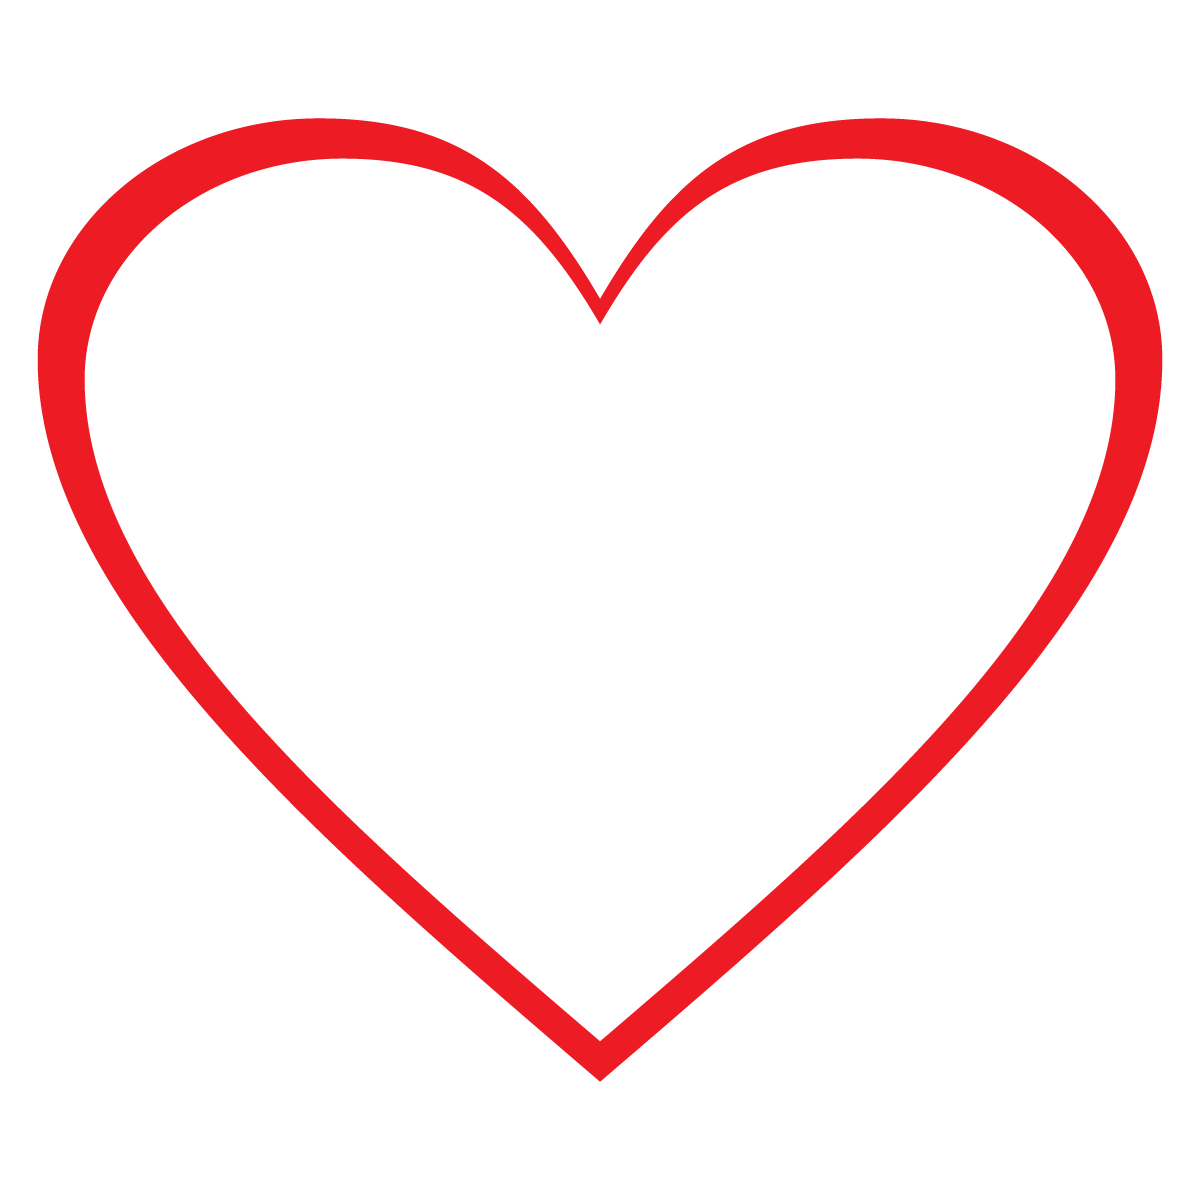 Hearts free heart clip art animations danasrhp top